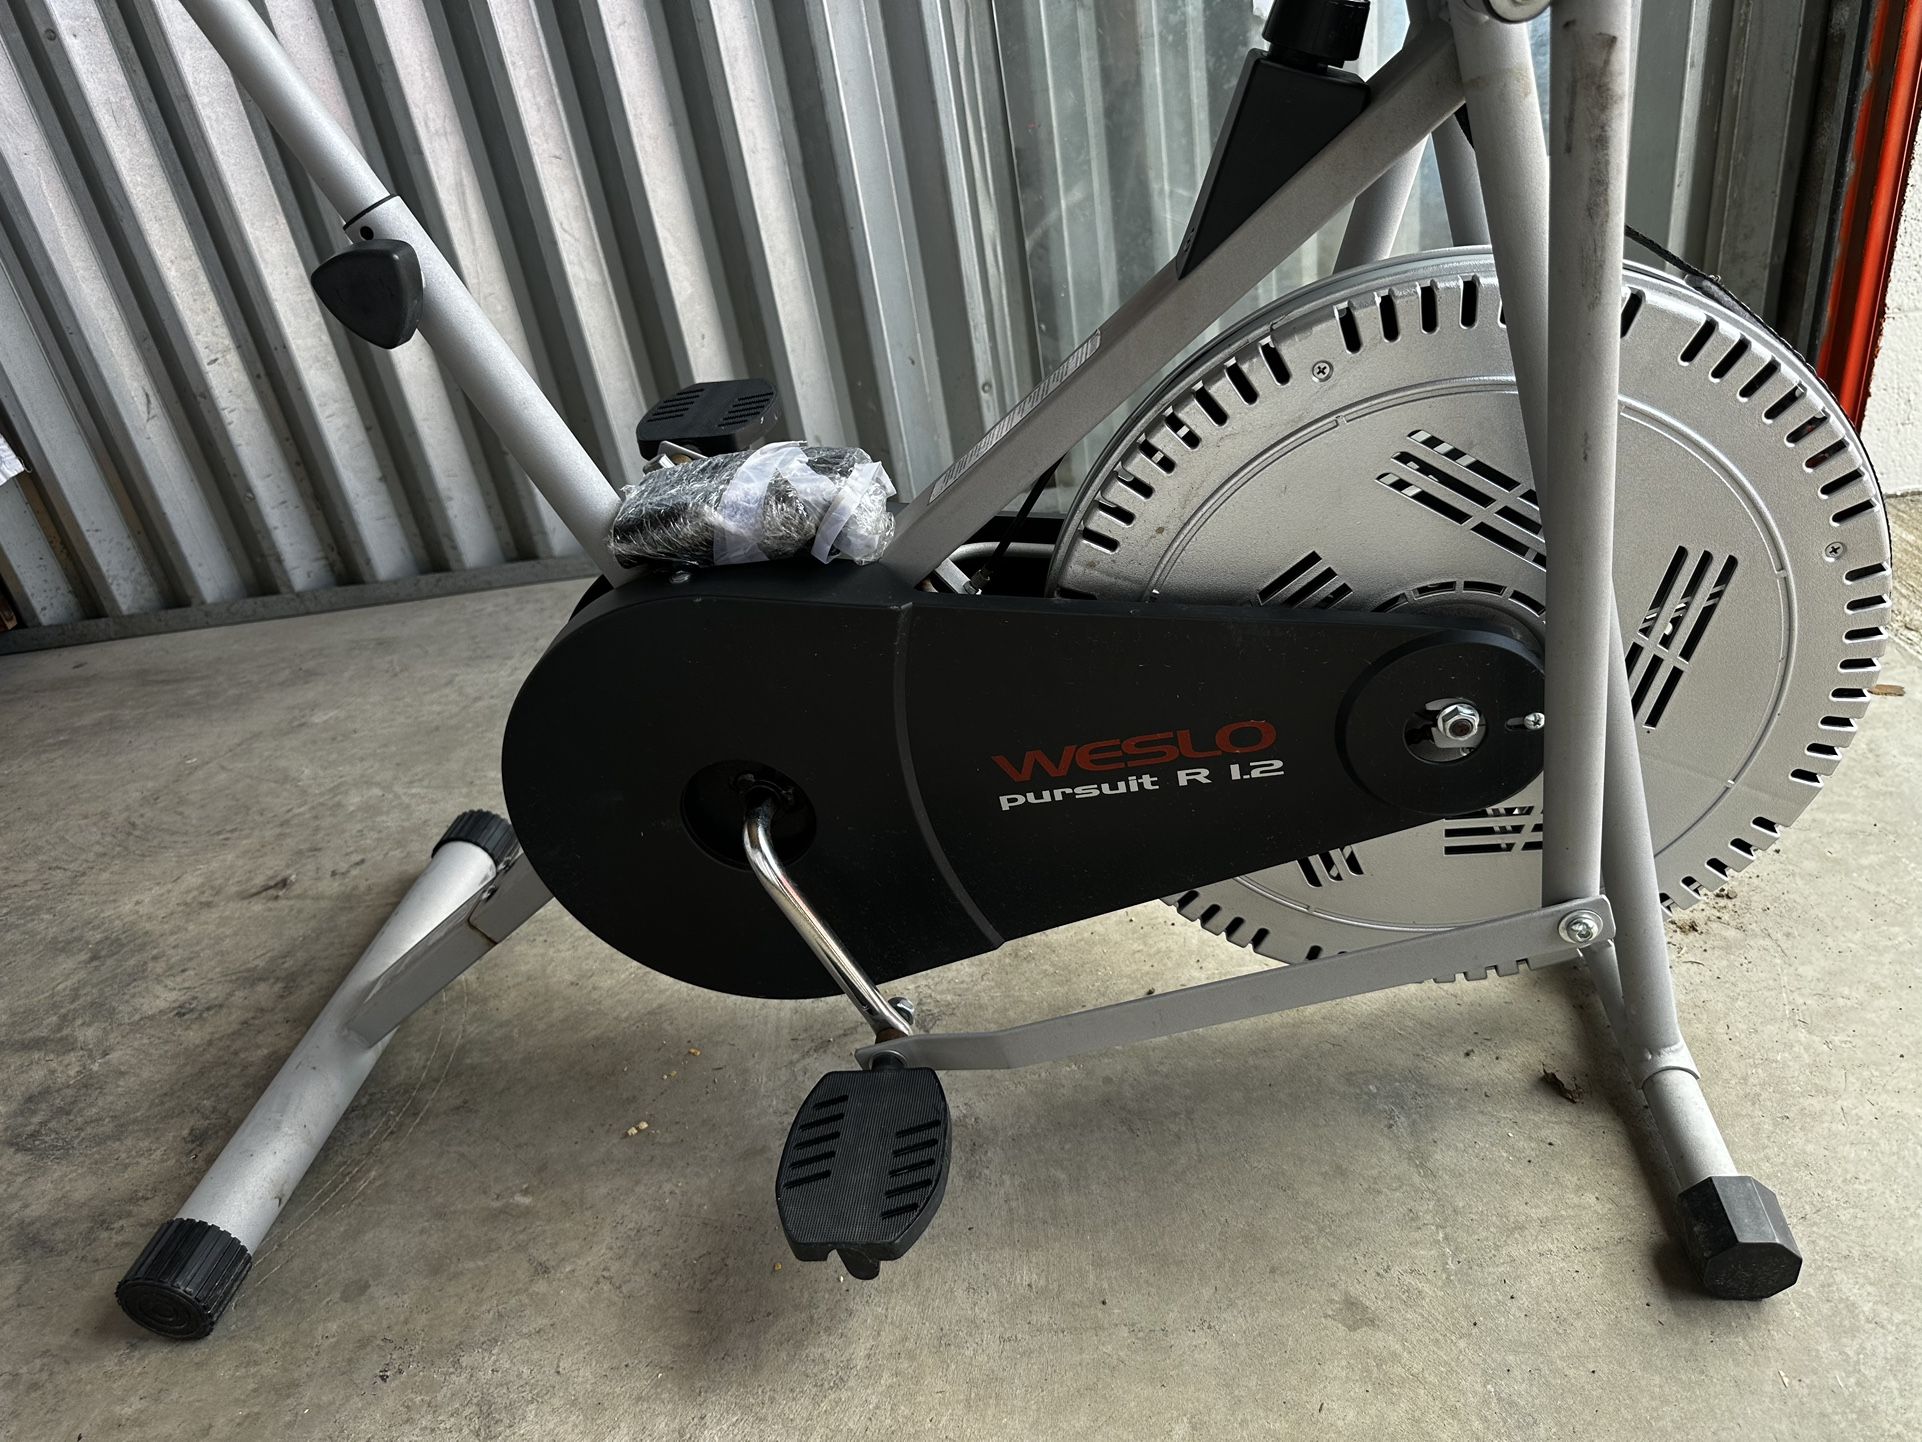 Weslo Pursuit R 1.2 Upright Adjustable Resistance Home Exercise Bike 